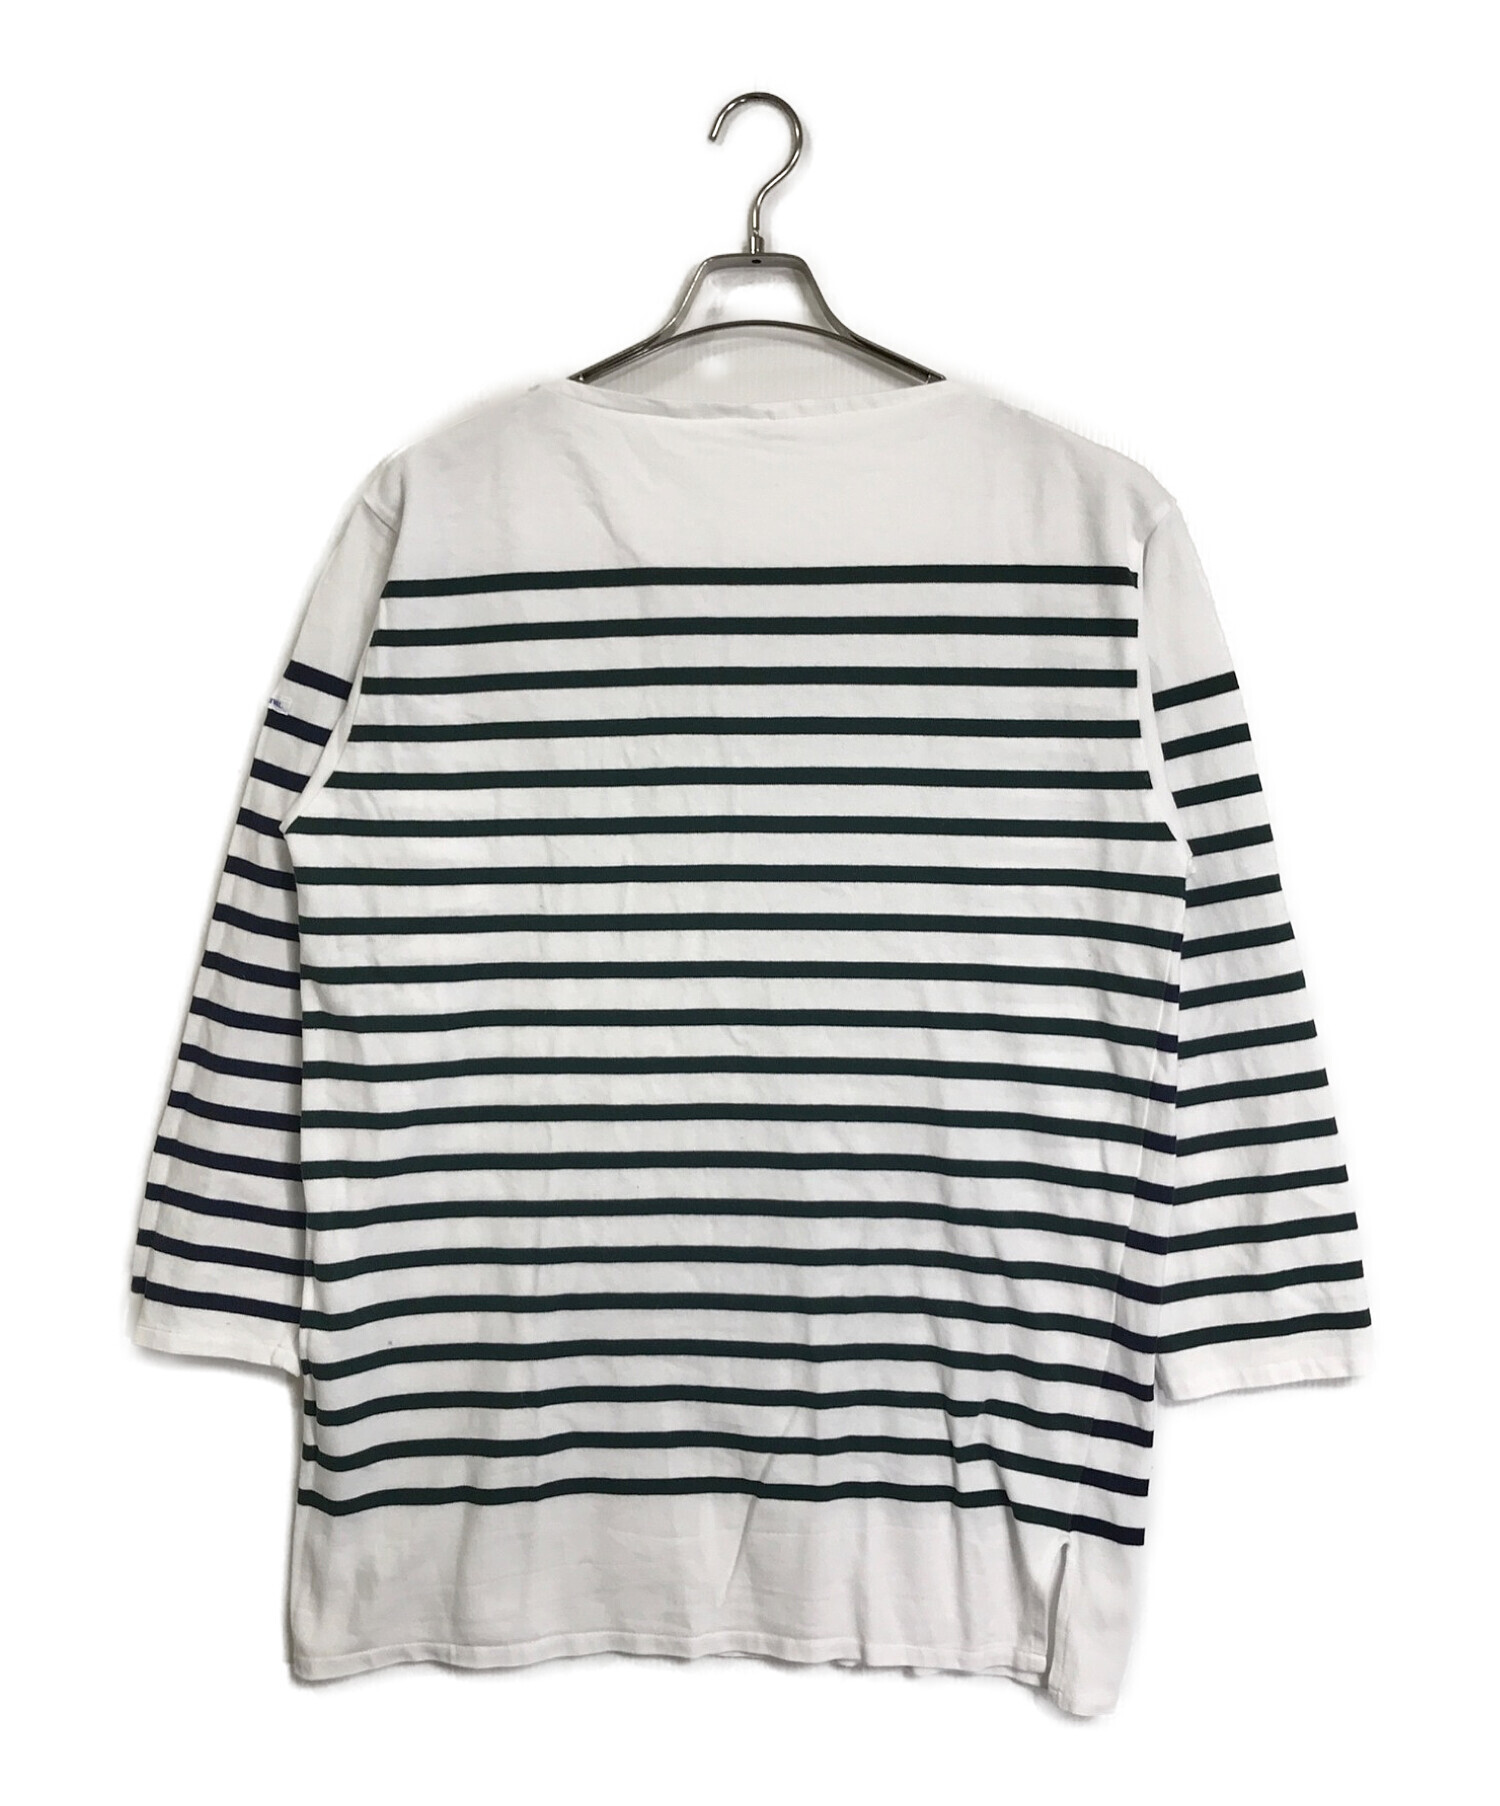 ORCIVAL (オーシバル) クレイジーパターンバスクシャツ ホワイト×グリーン サイズ:7